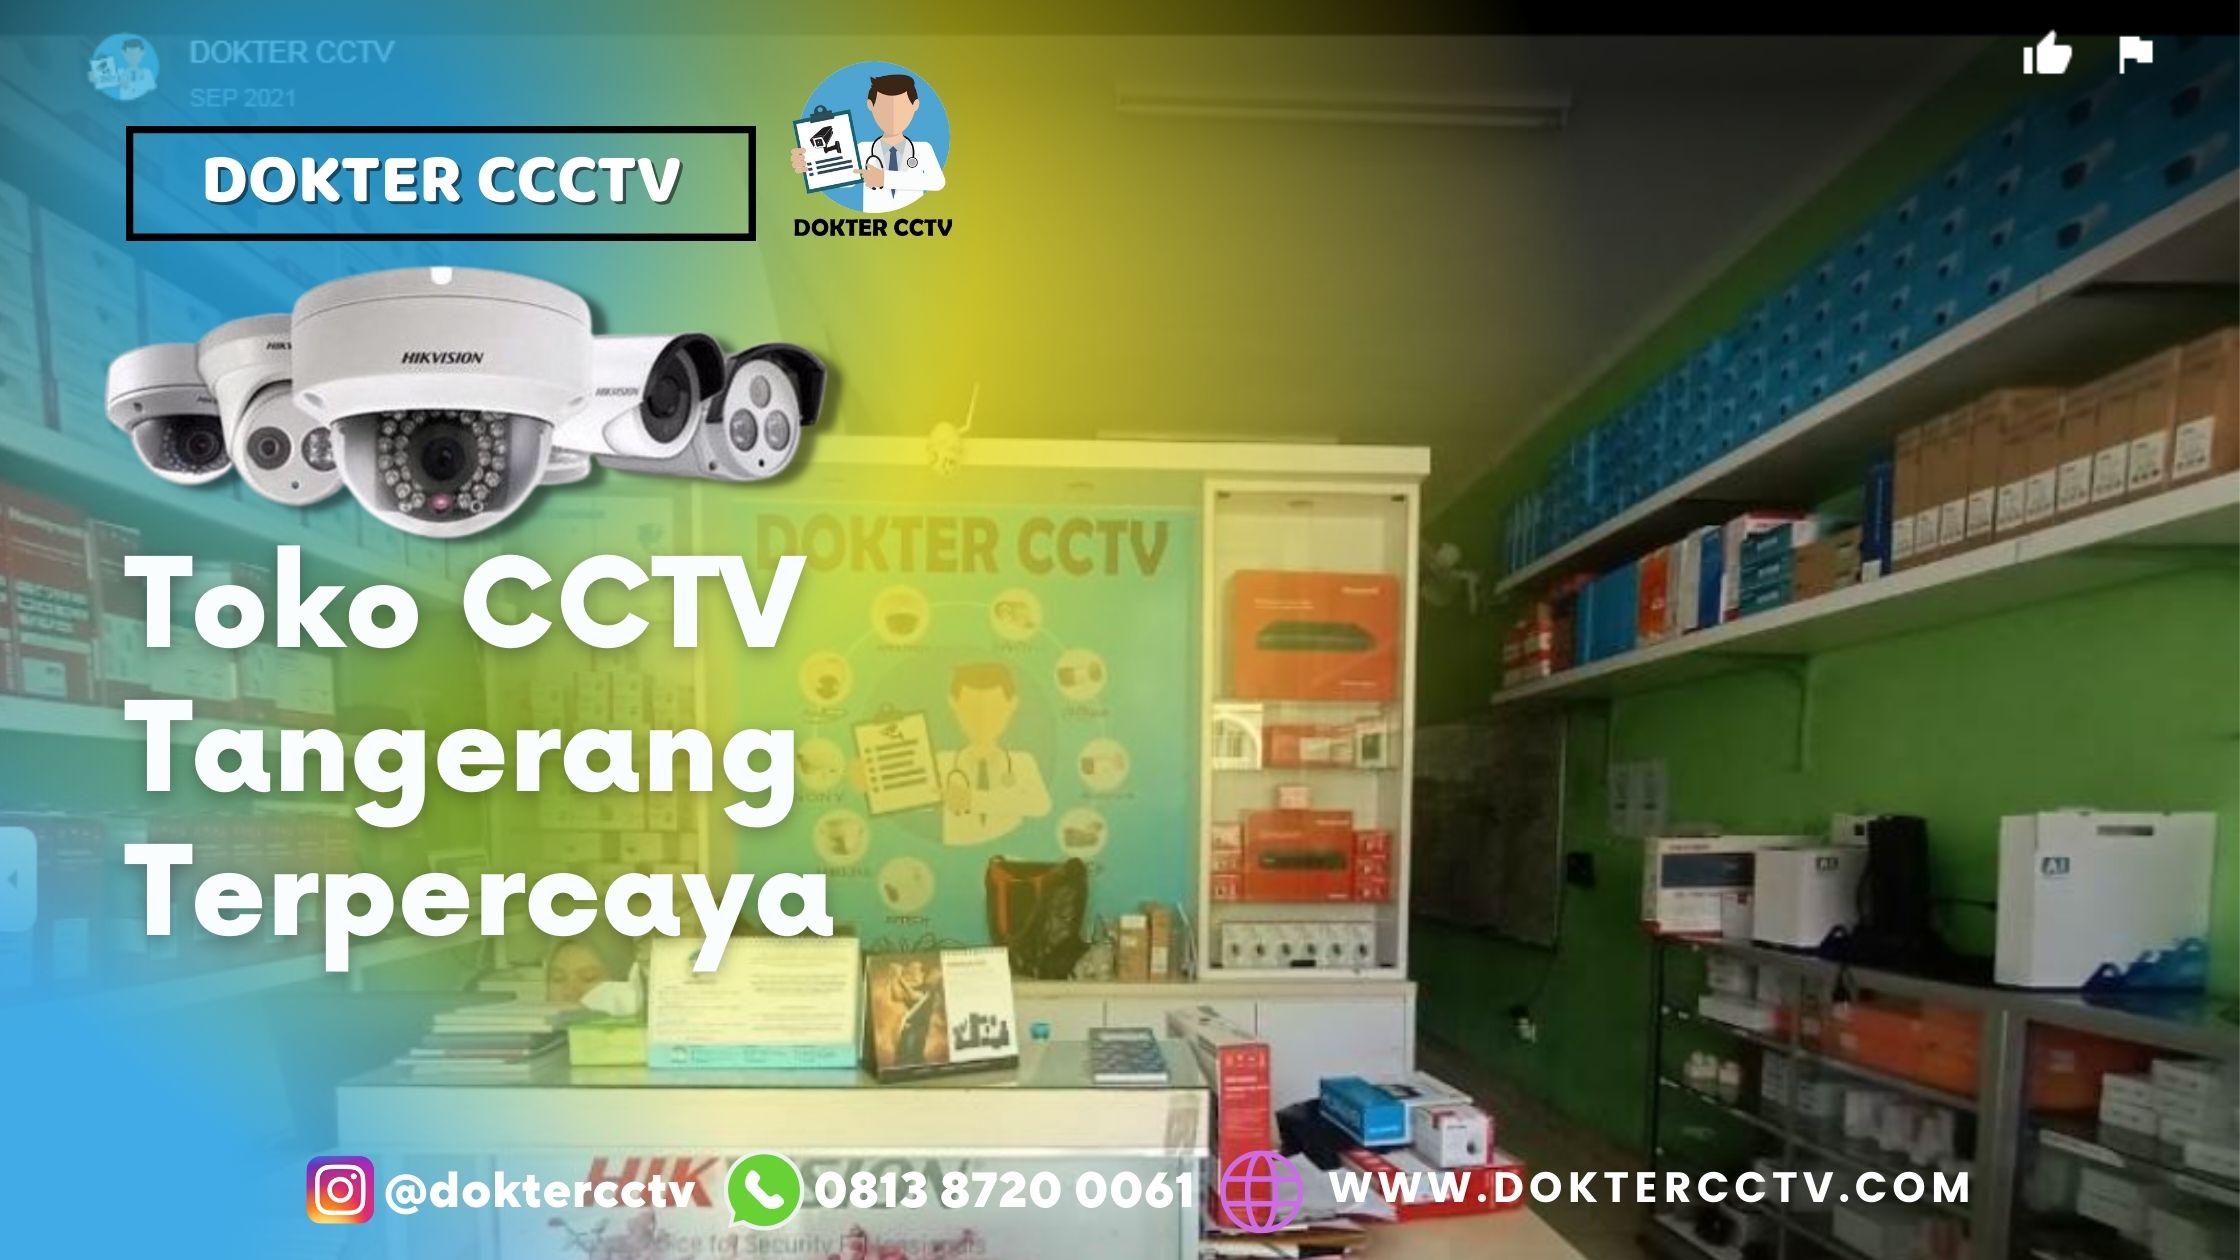 Toko CCTV Tangerang Terpercaya